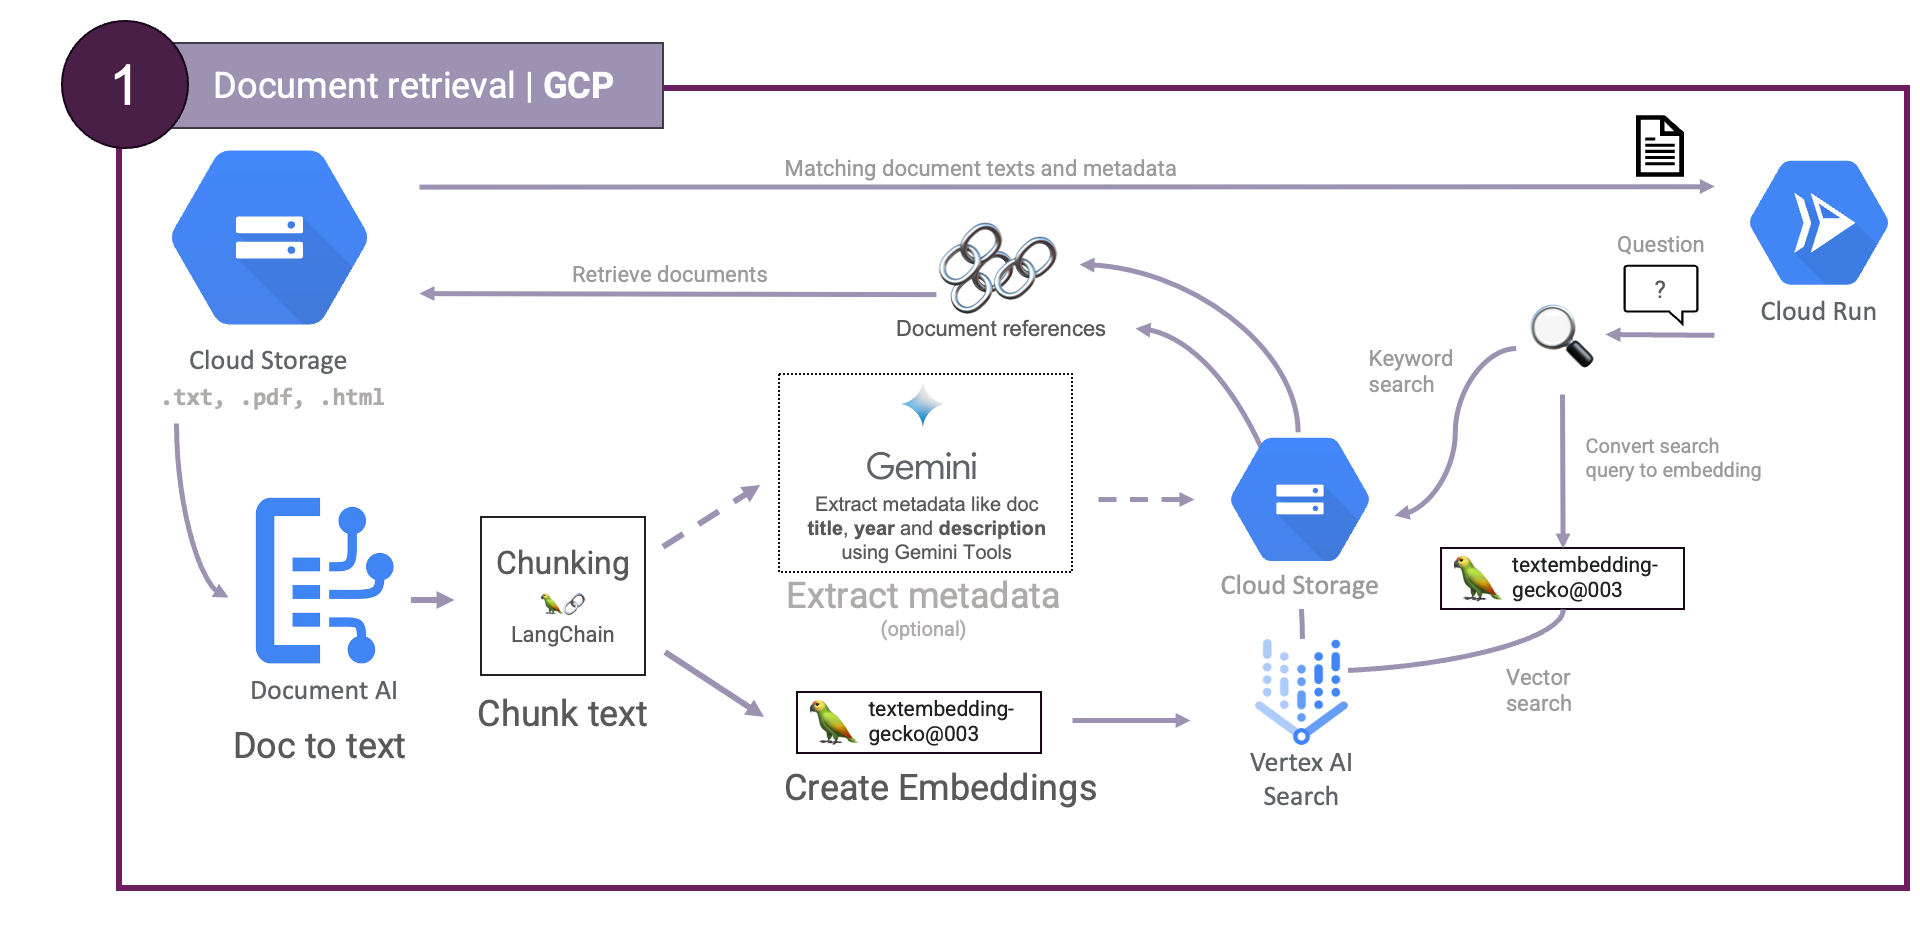 Document retrieval using GCP services including Document AI, <code>textembedding-gecko</code> and Vertex AI Vector Search.